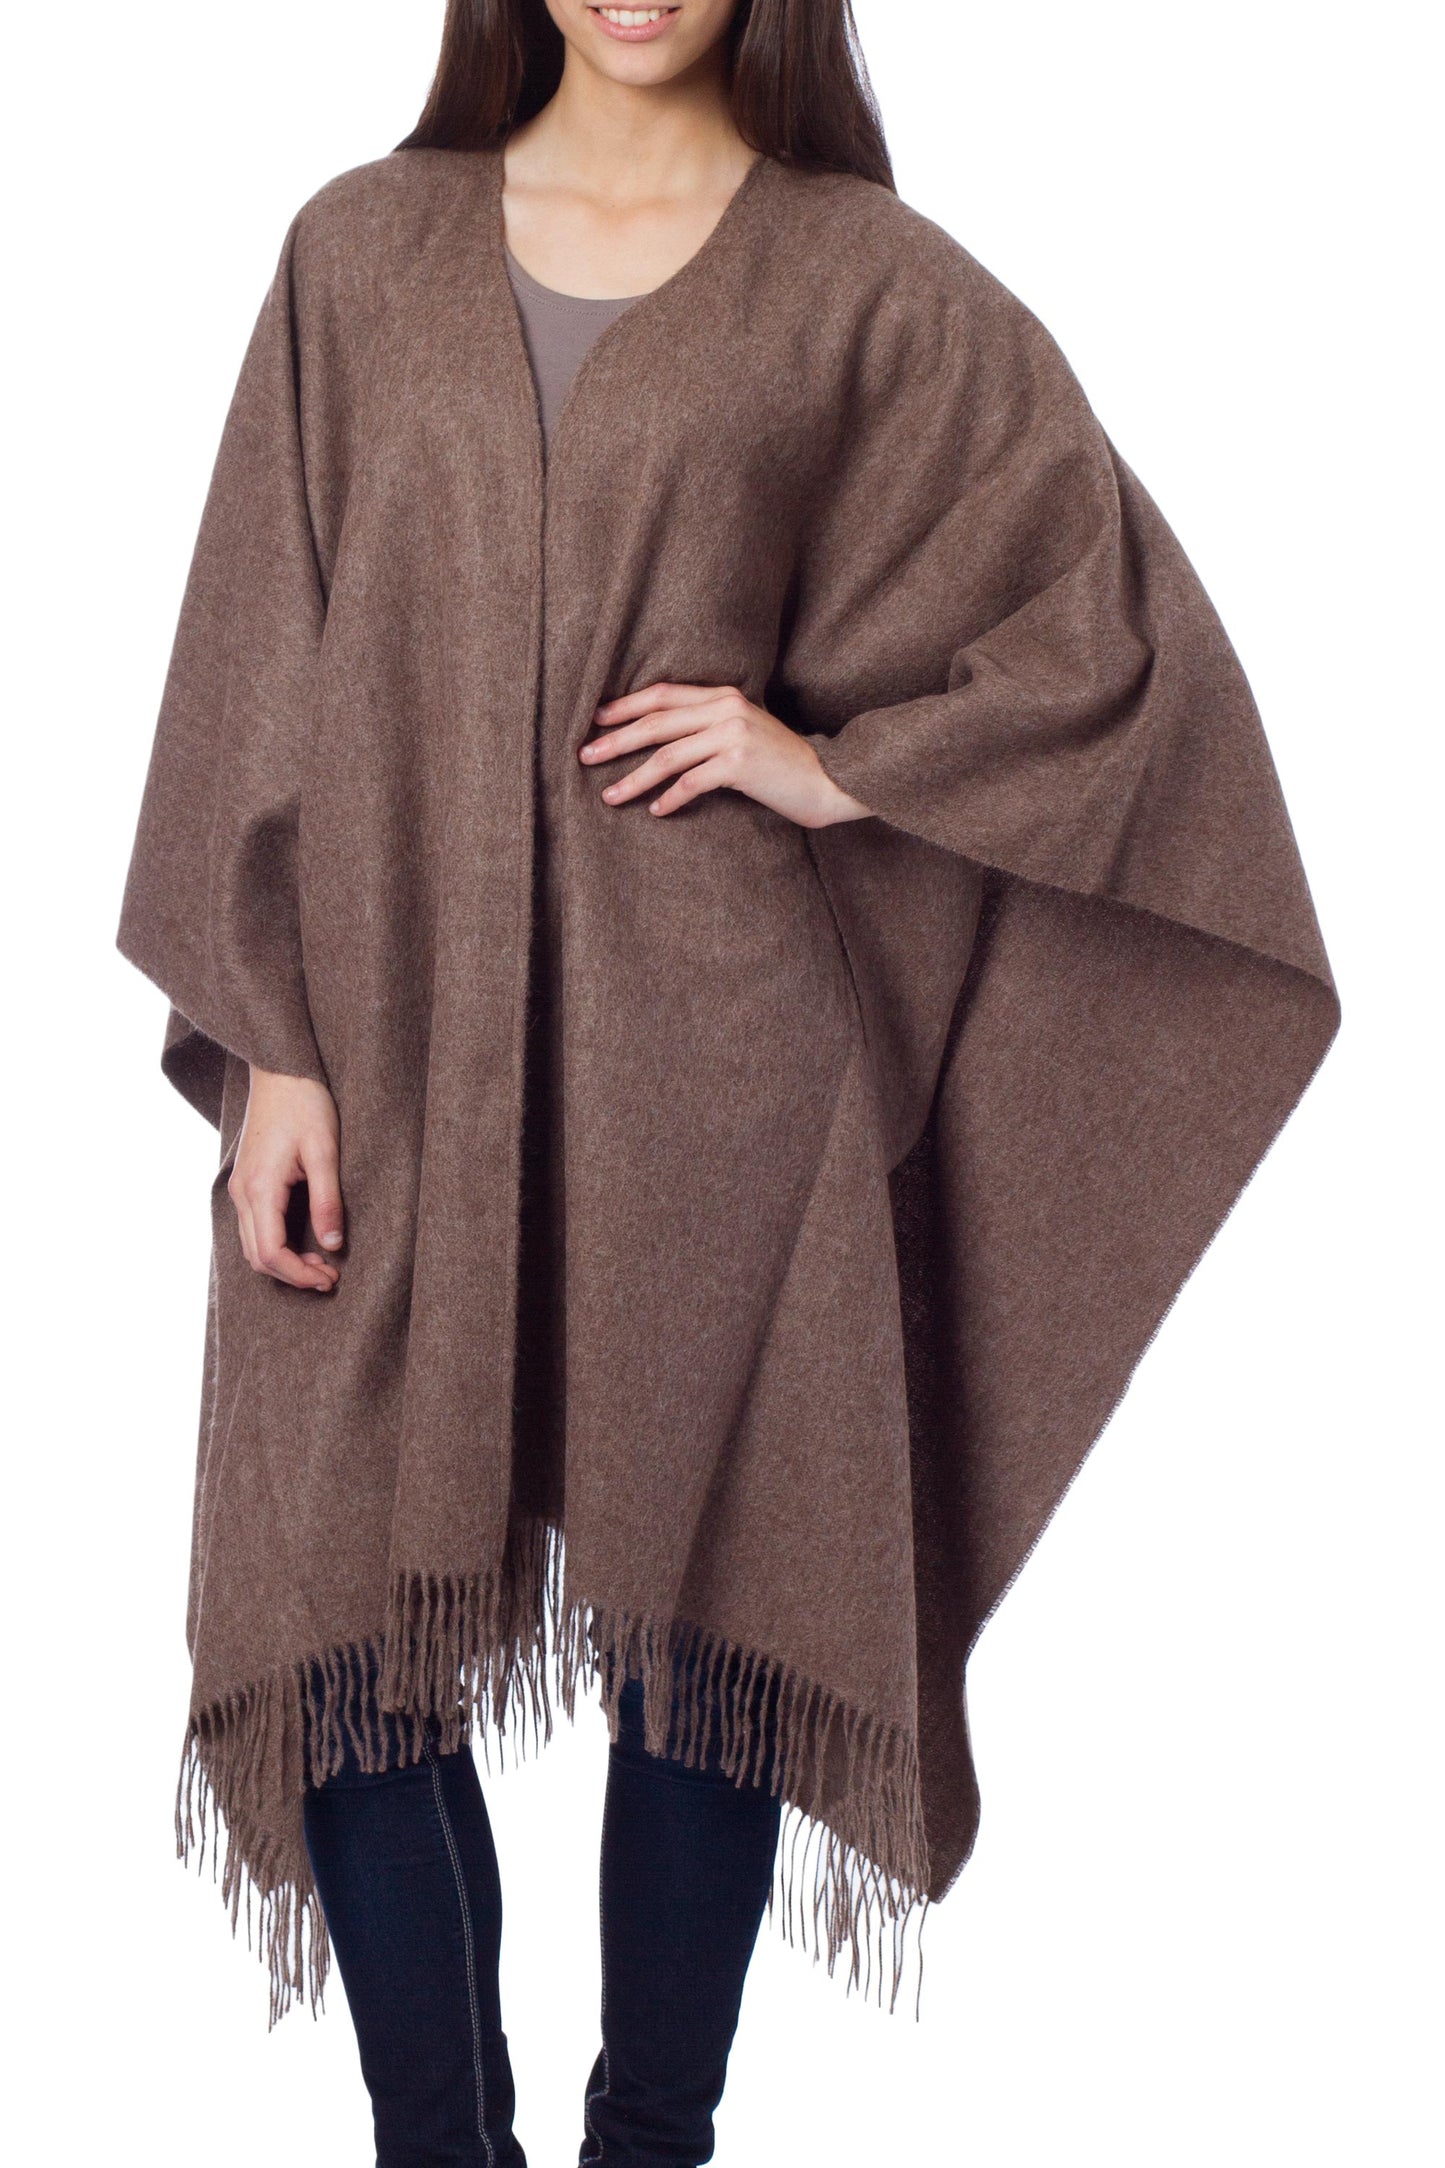 Lush Dark Brown Alpaca Wool Solid Wrap Ruana from Peru